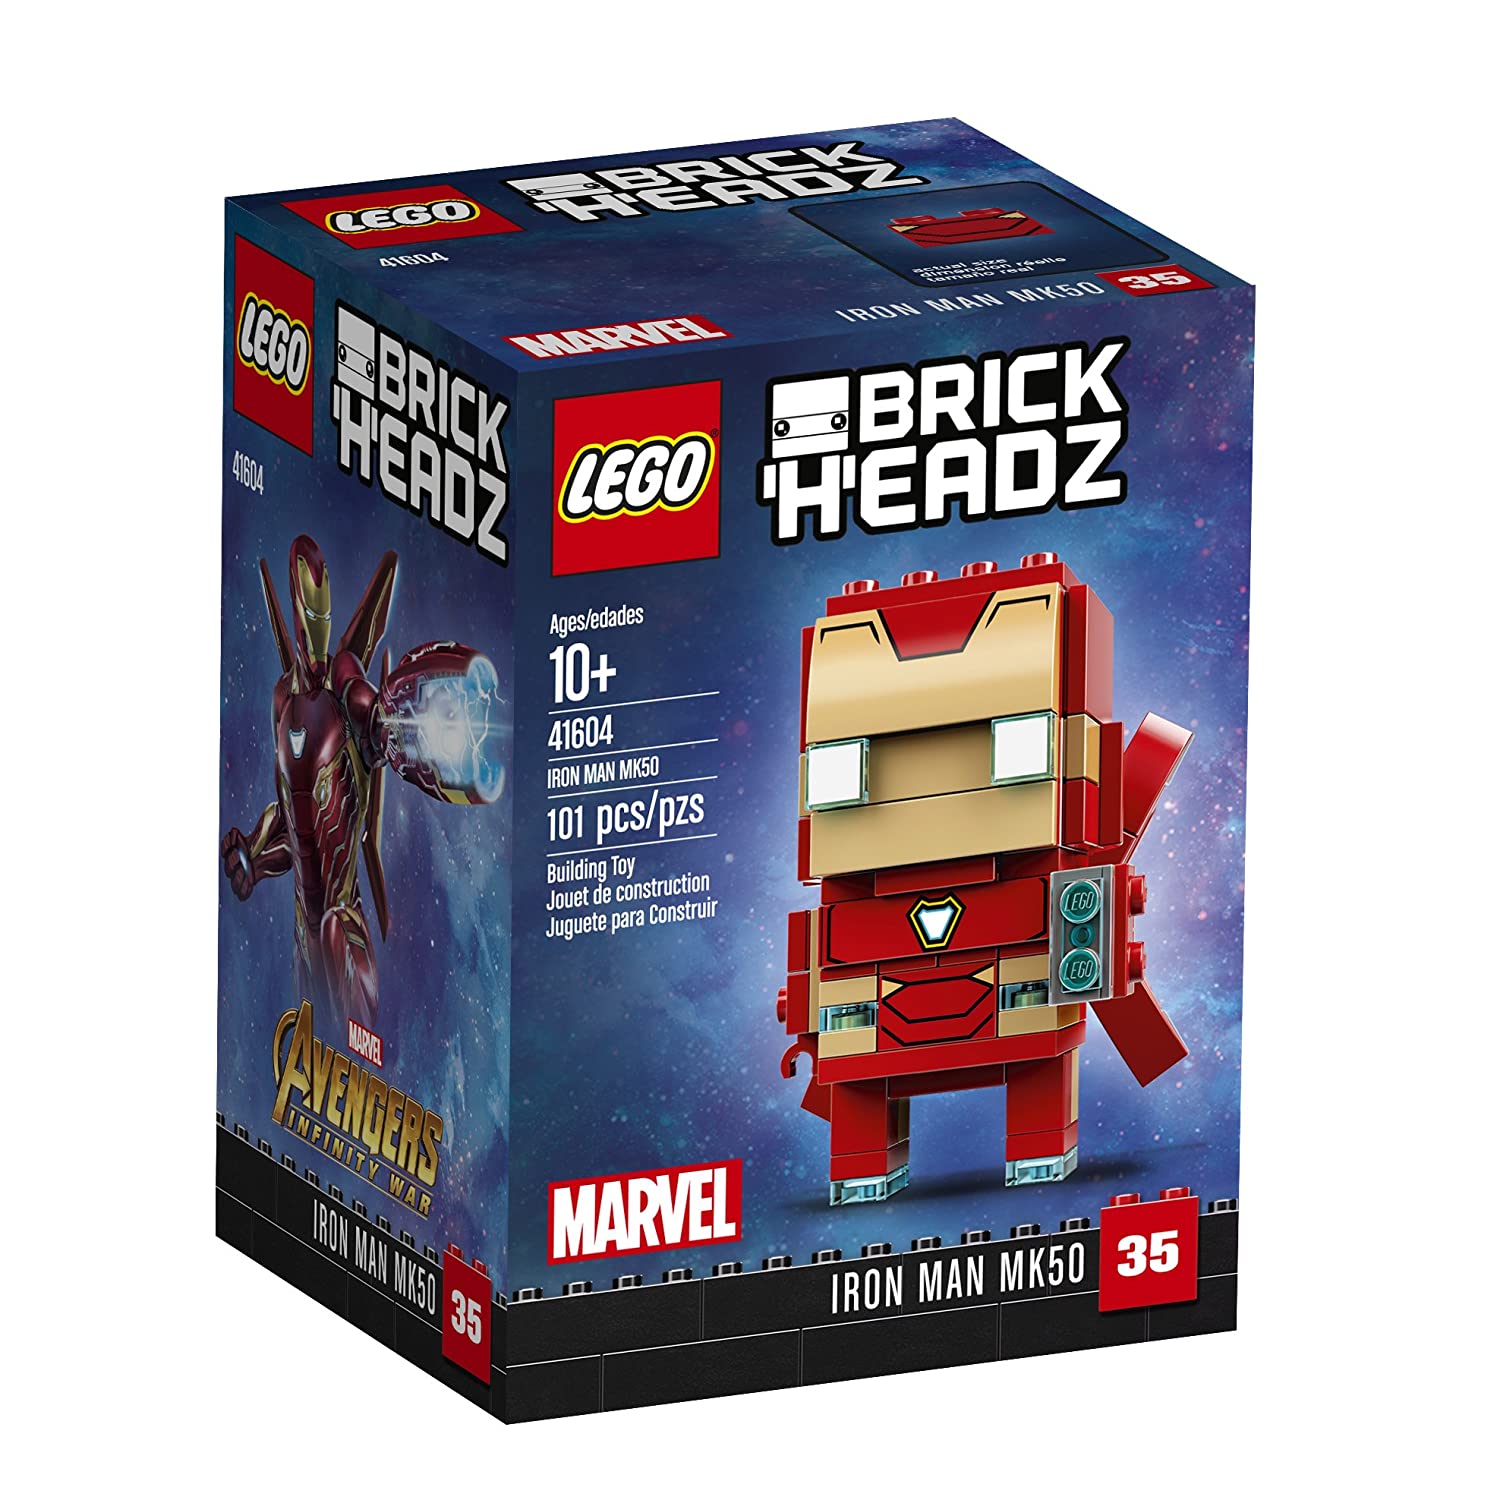 11 Best Lego Brickheadz 2022 - Buying Guide & Reviews 8